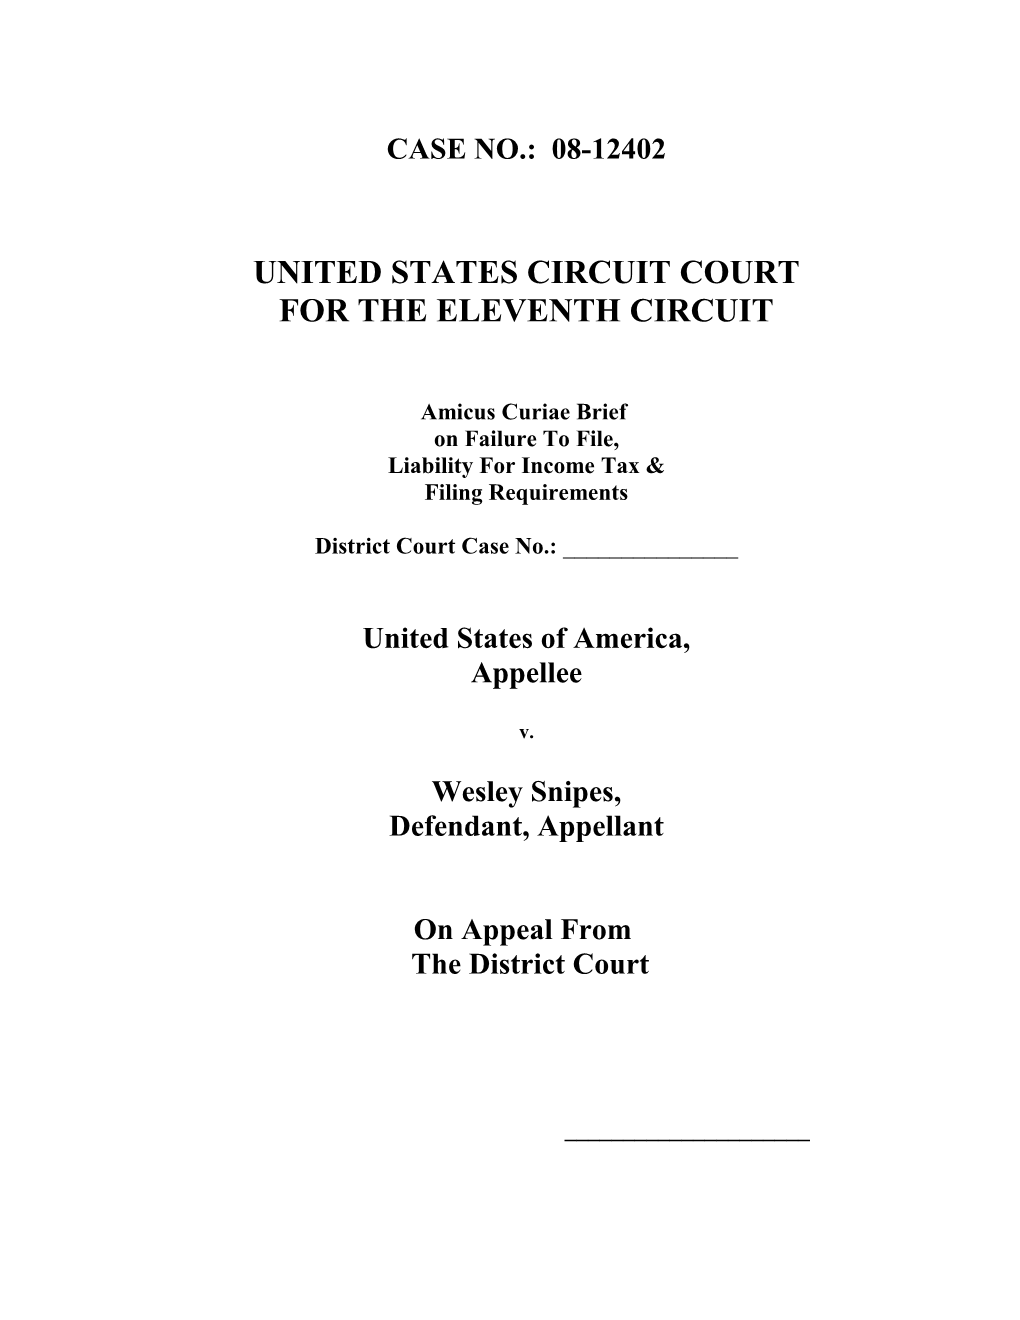 United States Circuit Court